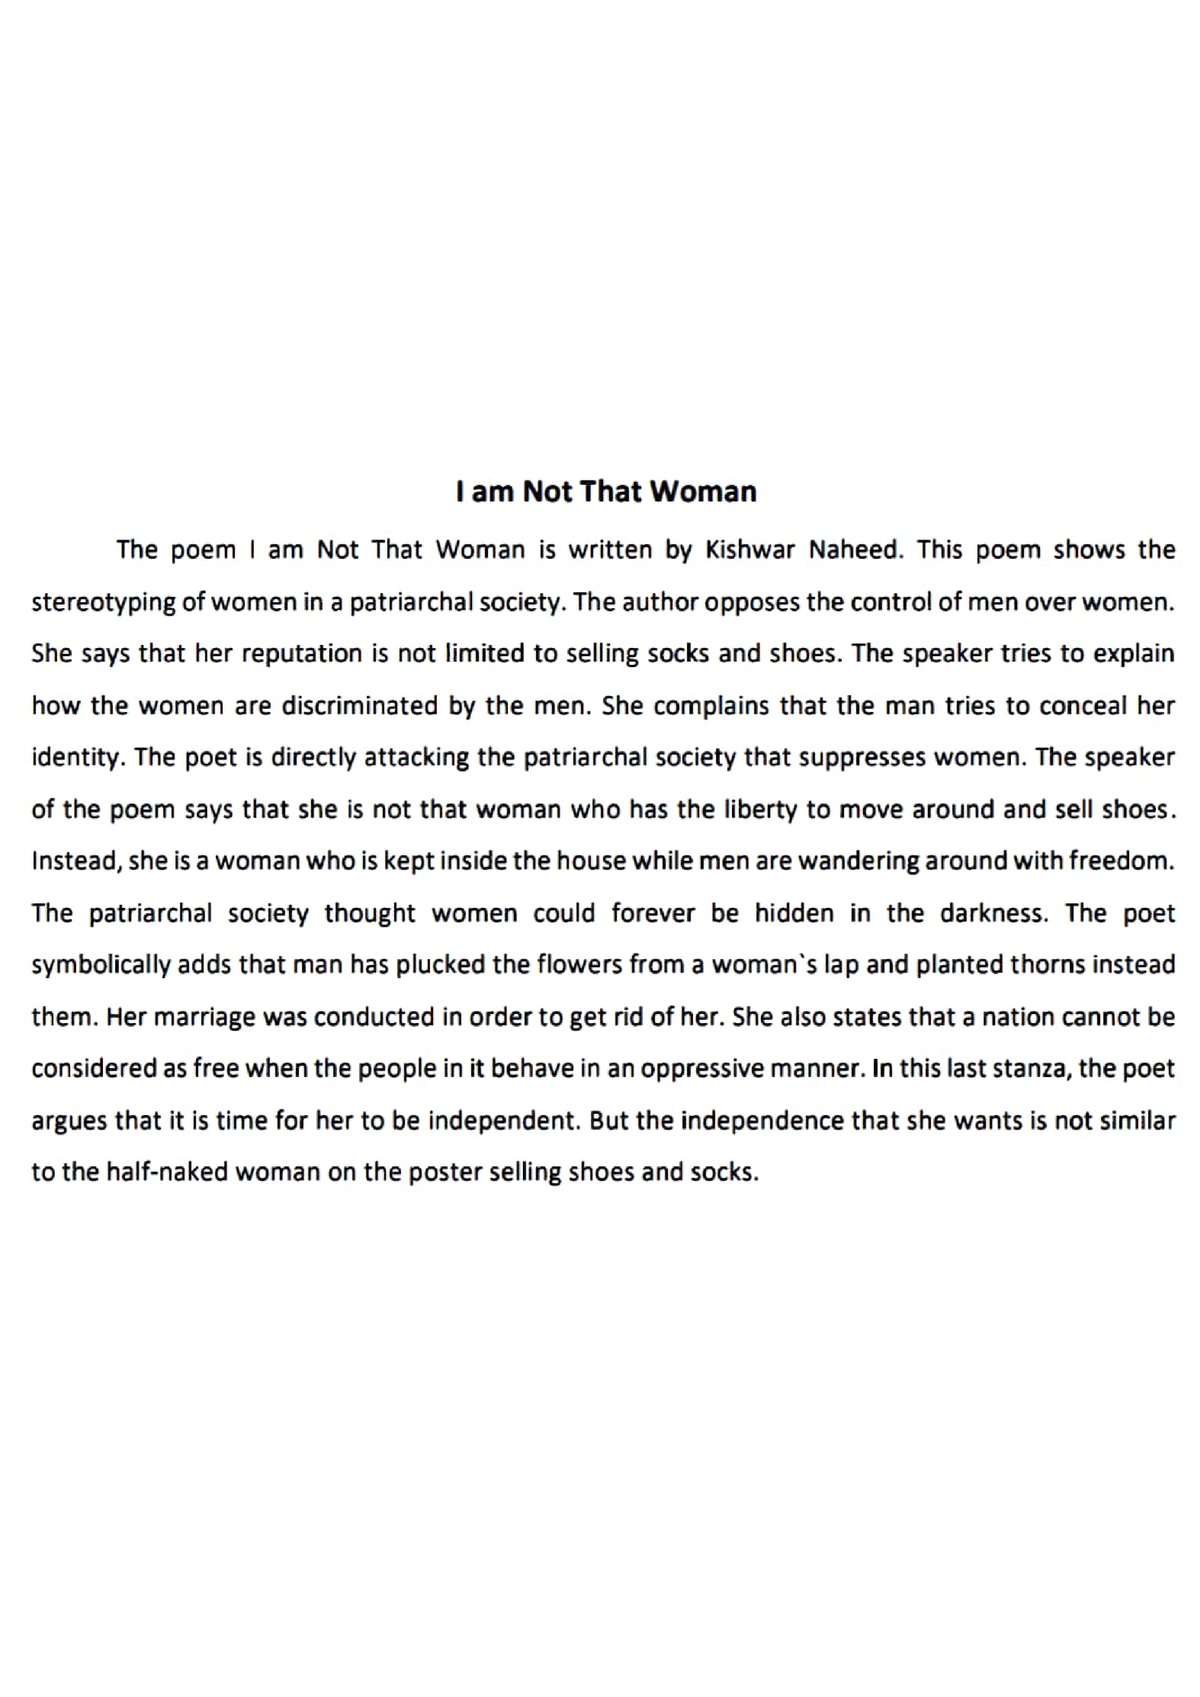 i am not that woman poem essay